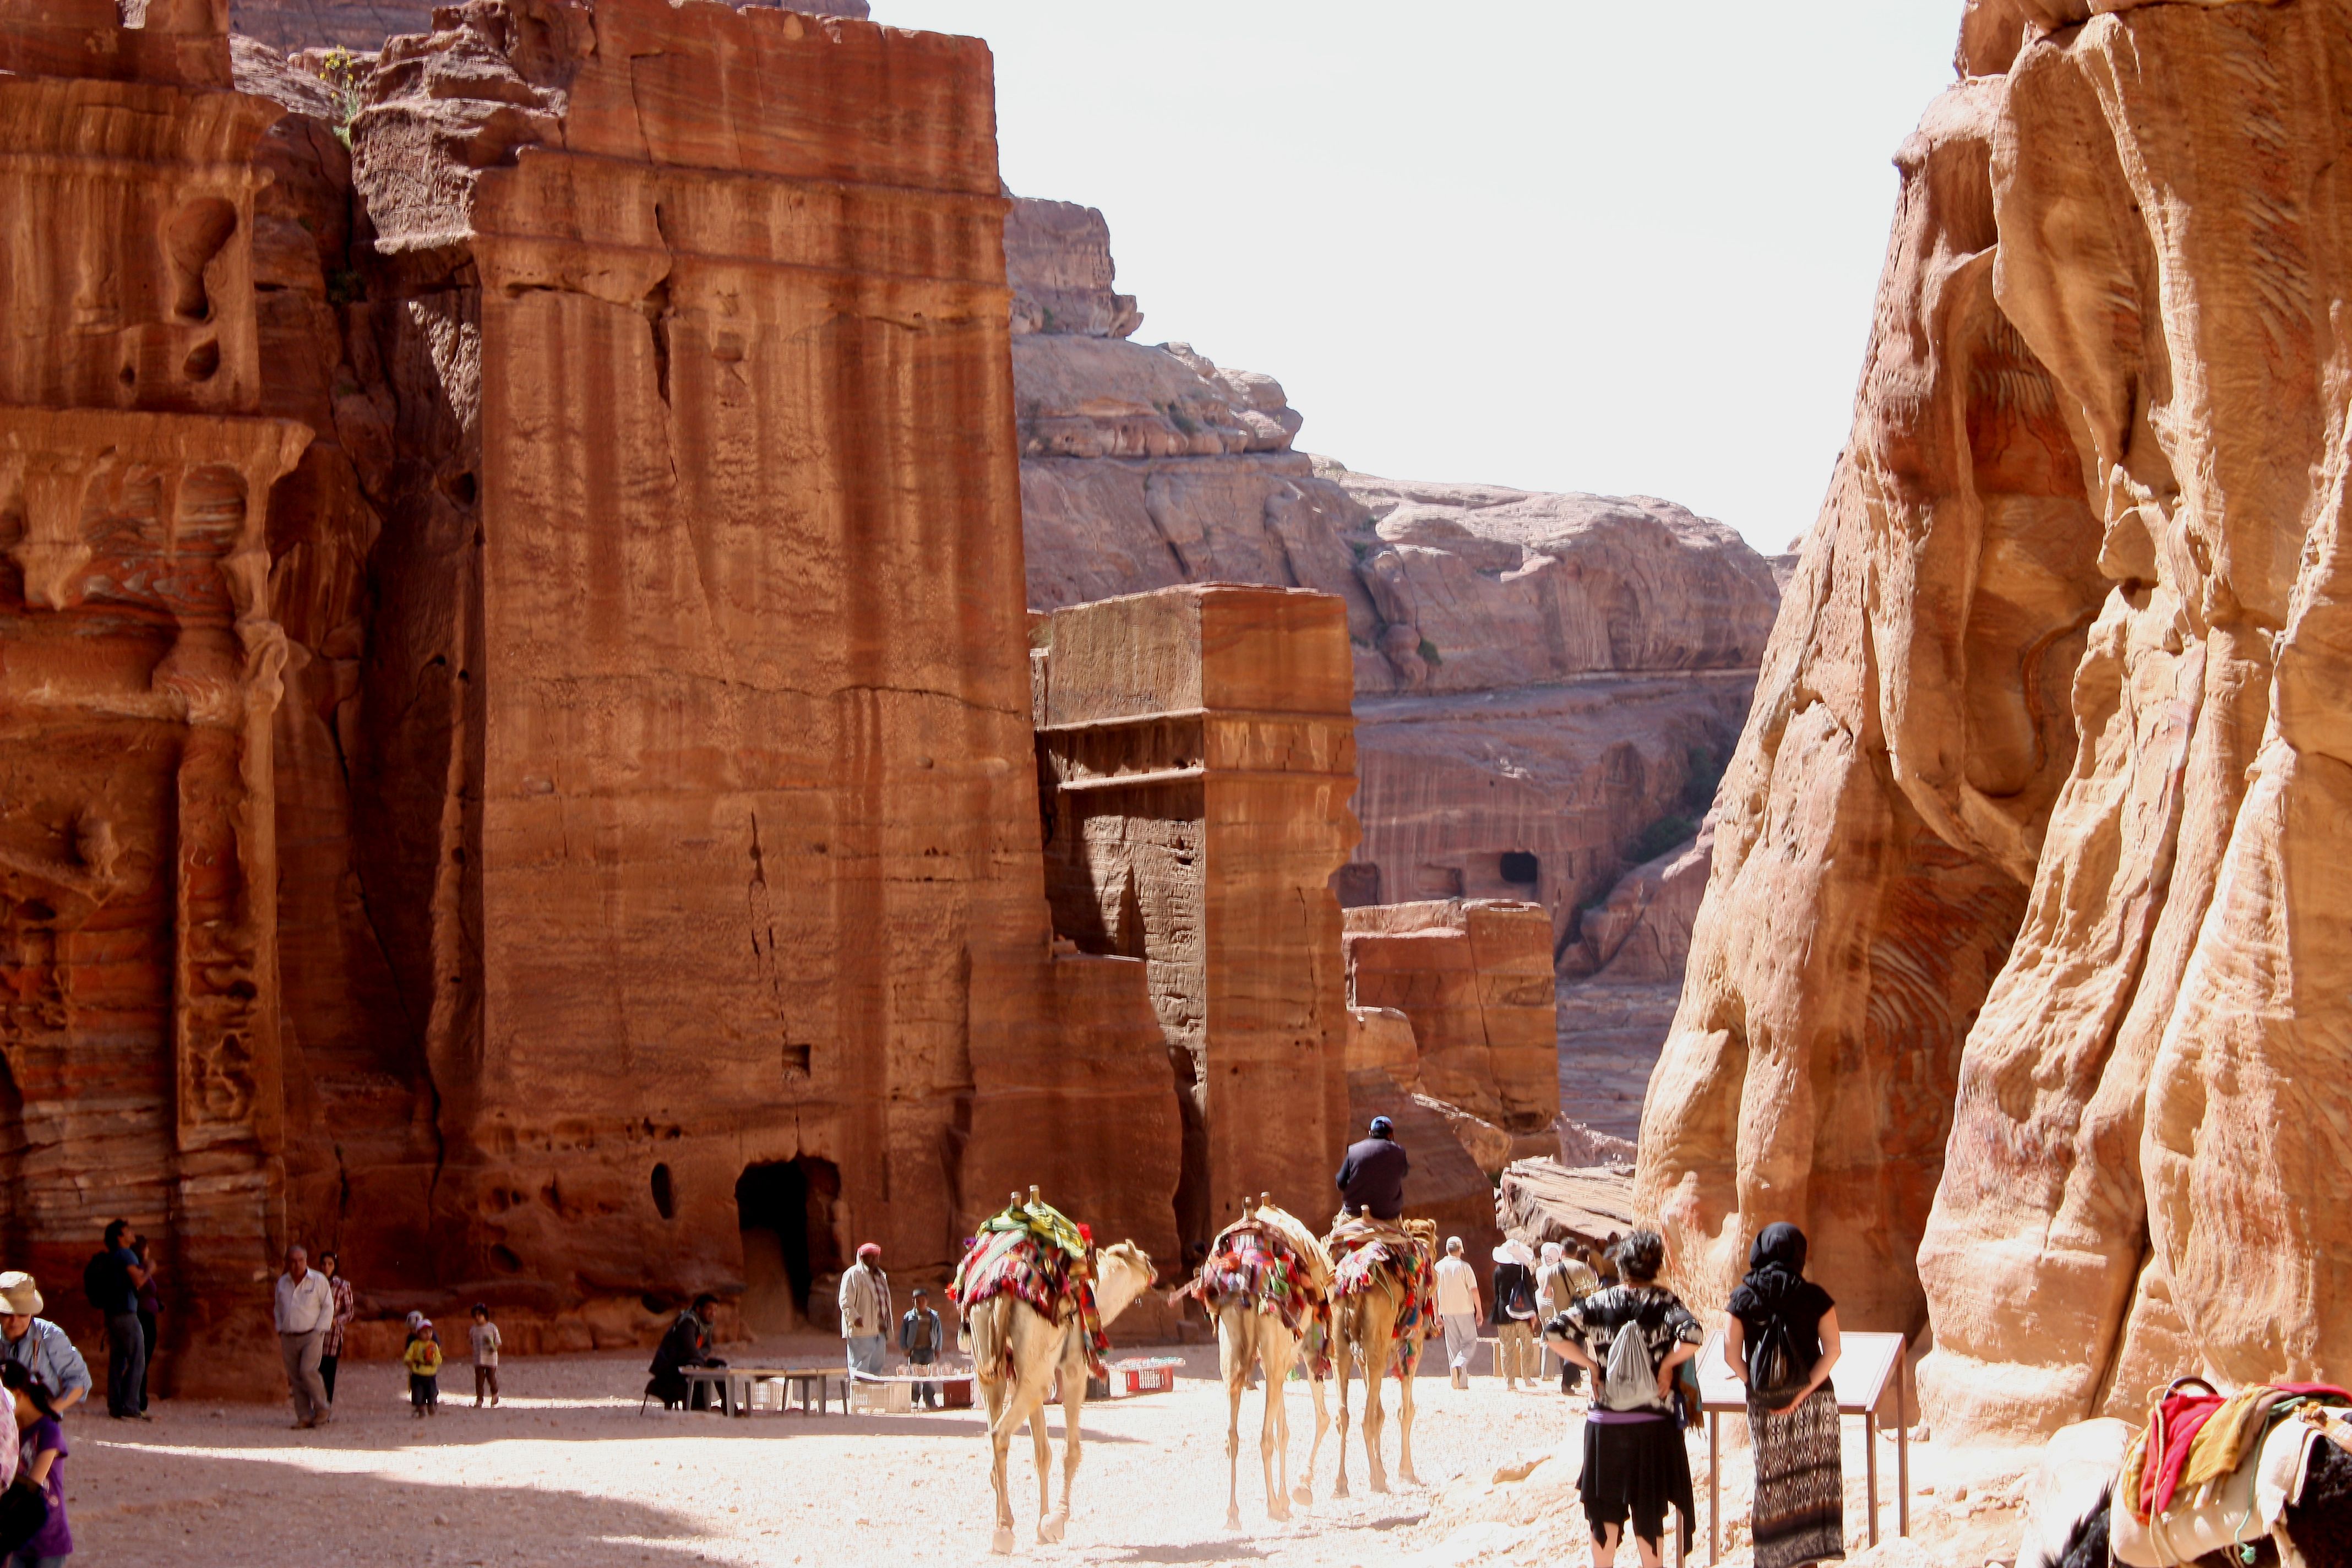 Ghor, Petra, and Camel Selfies – Salam from Amman